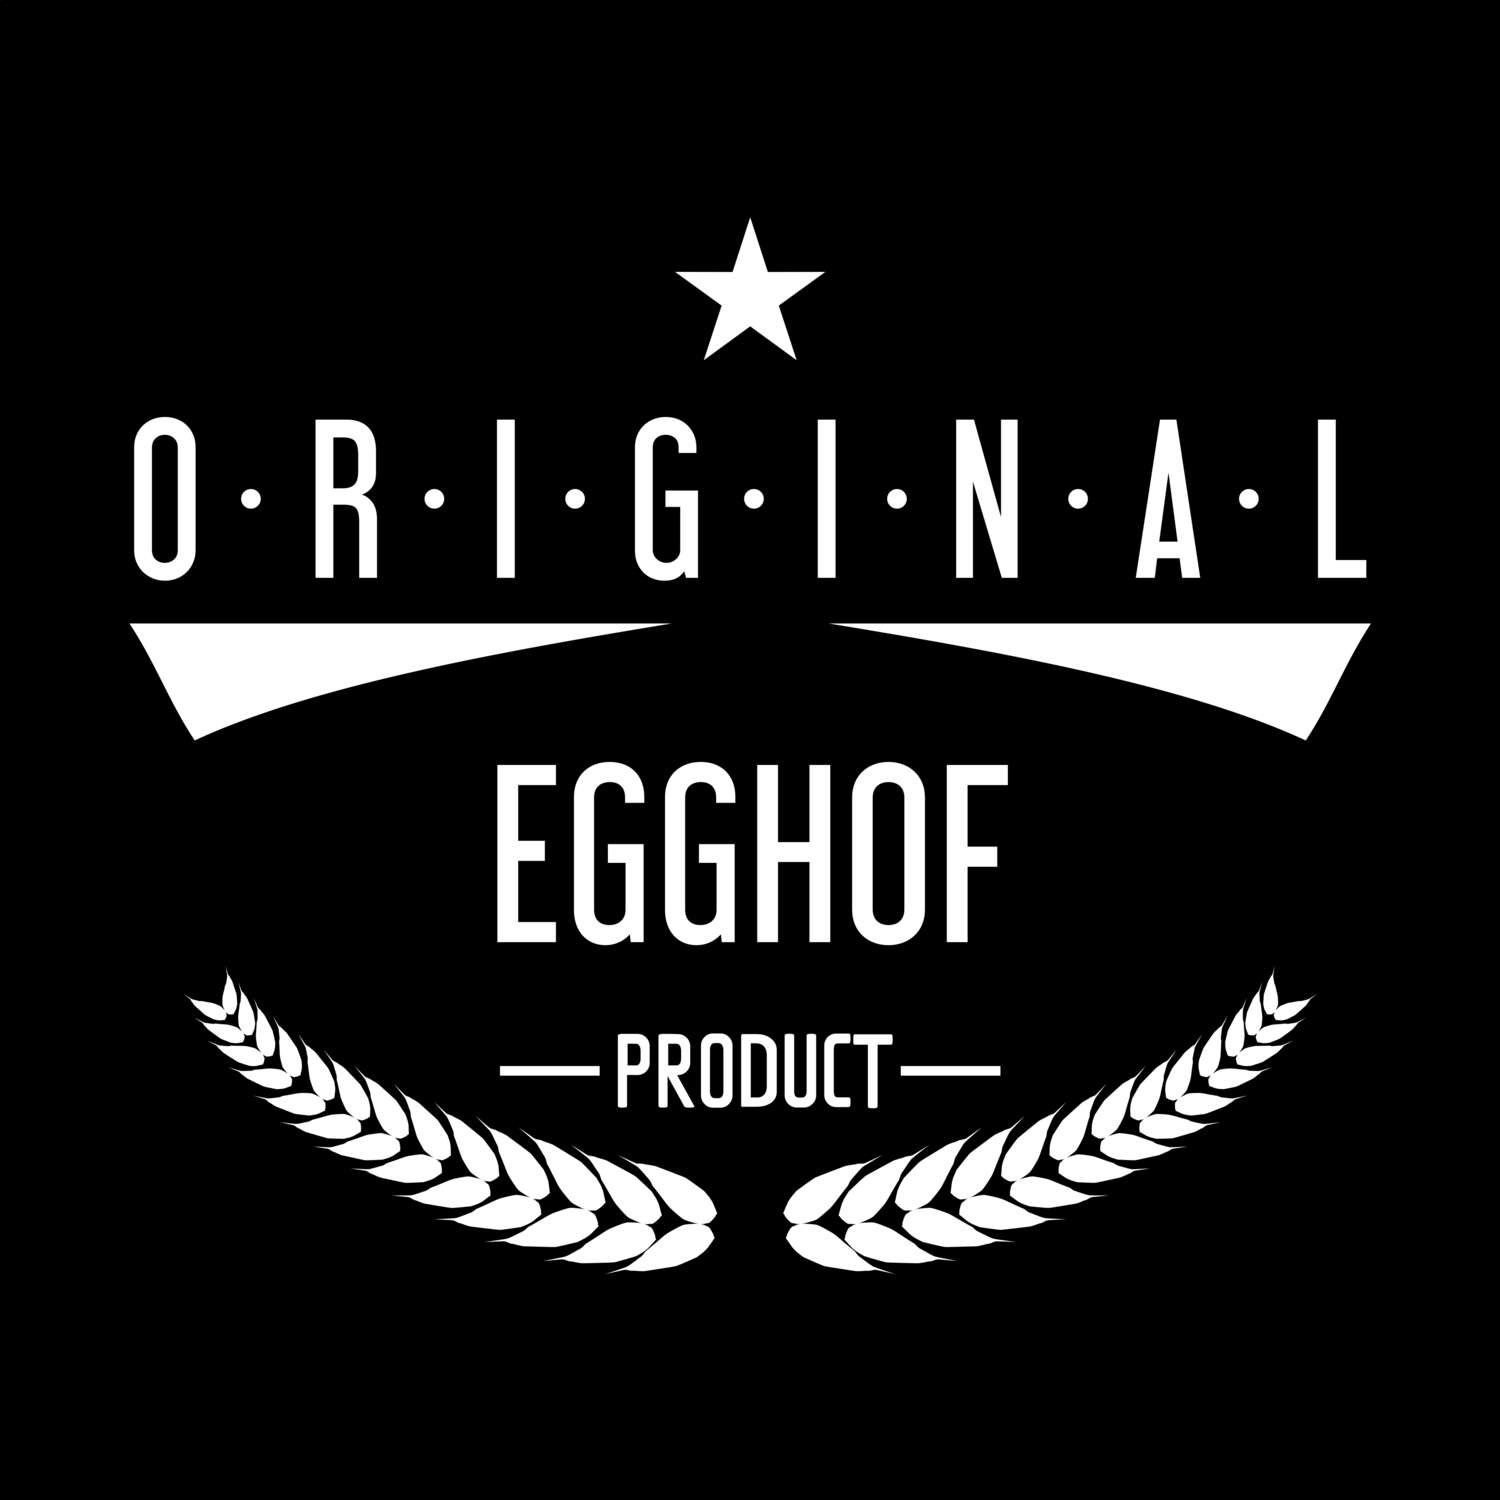 Egghof T-Shirt »Original Product«